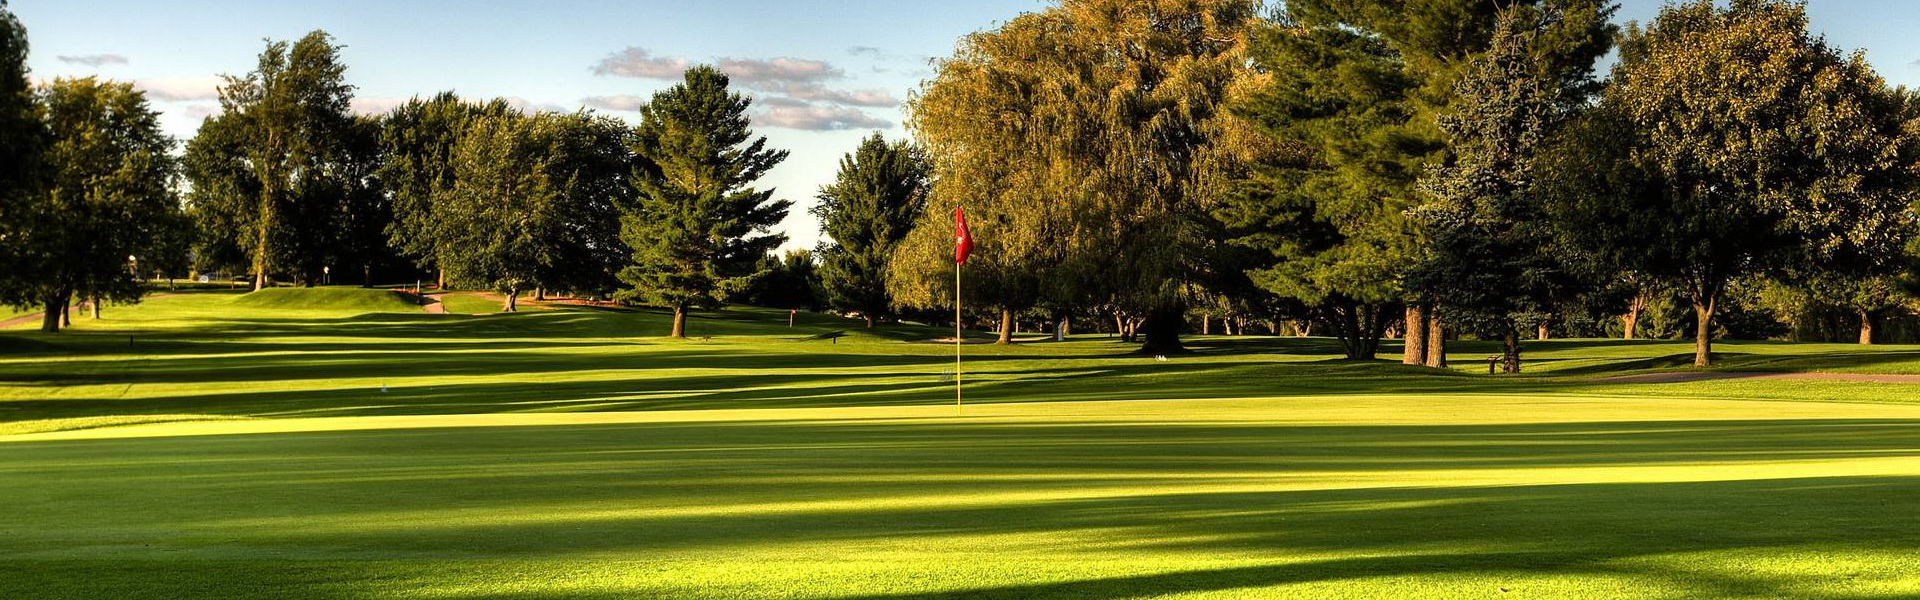 golf-banner-3.jpg